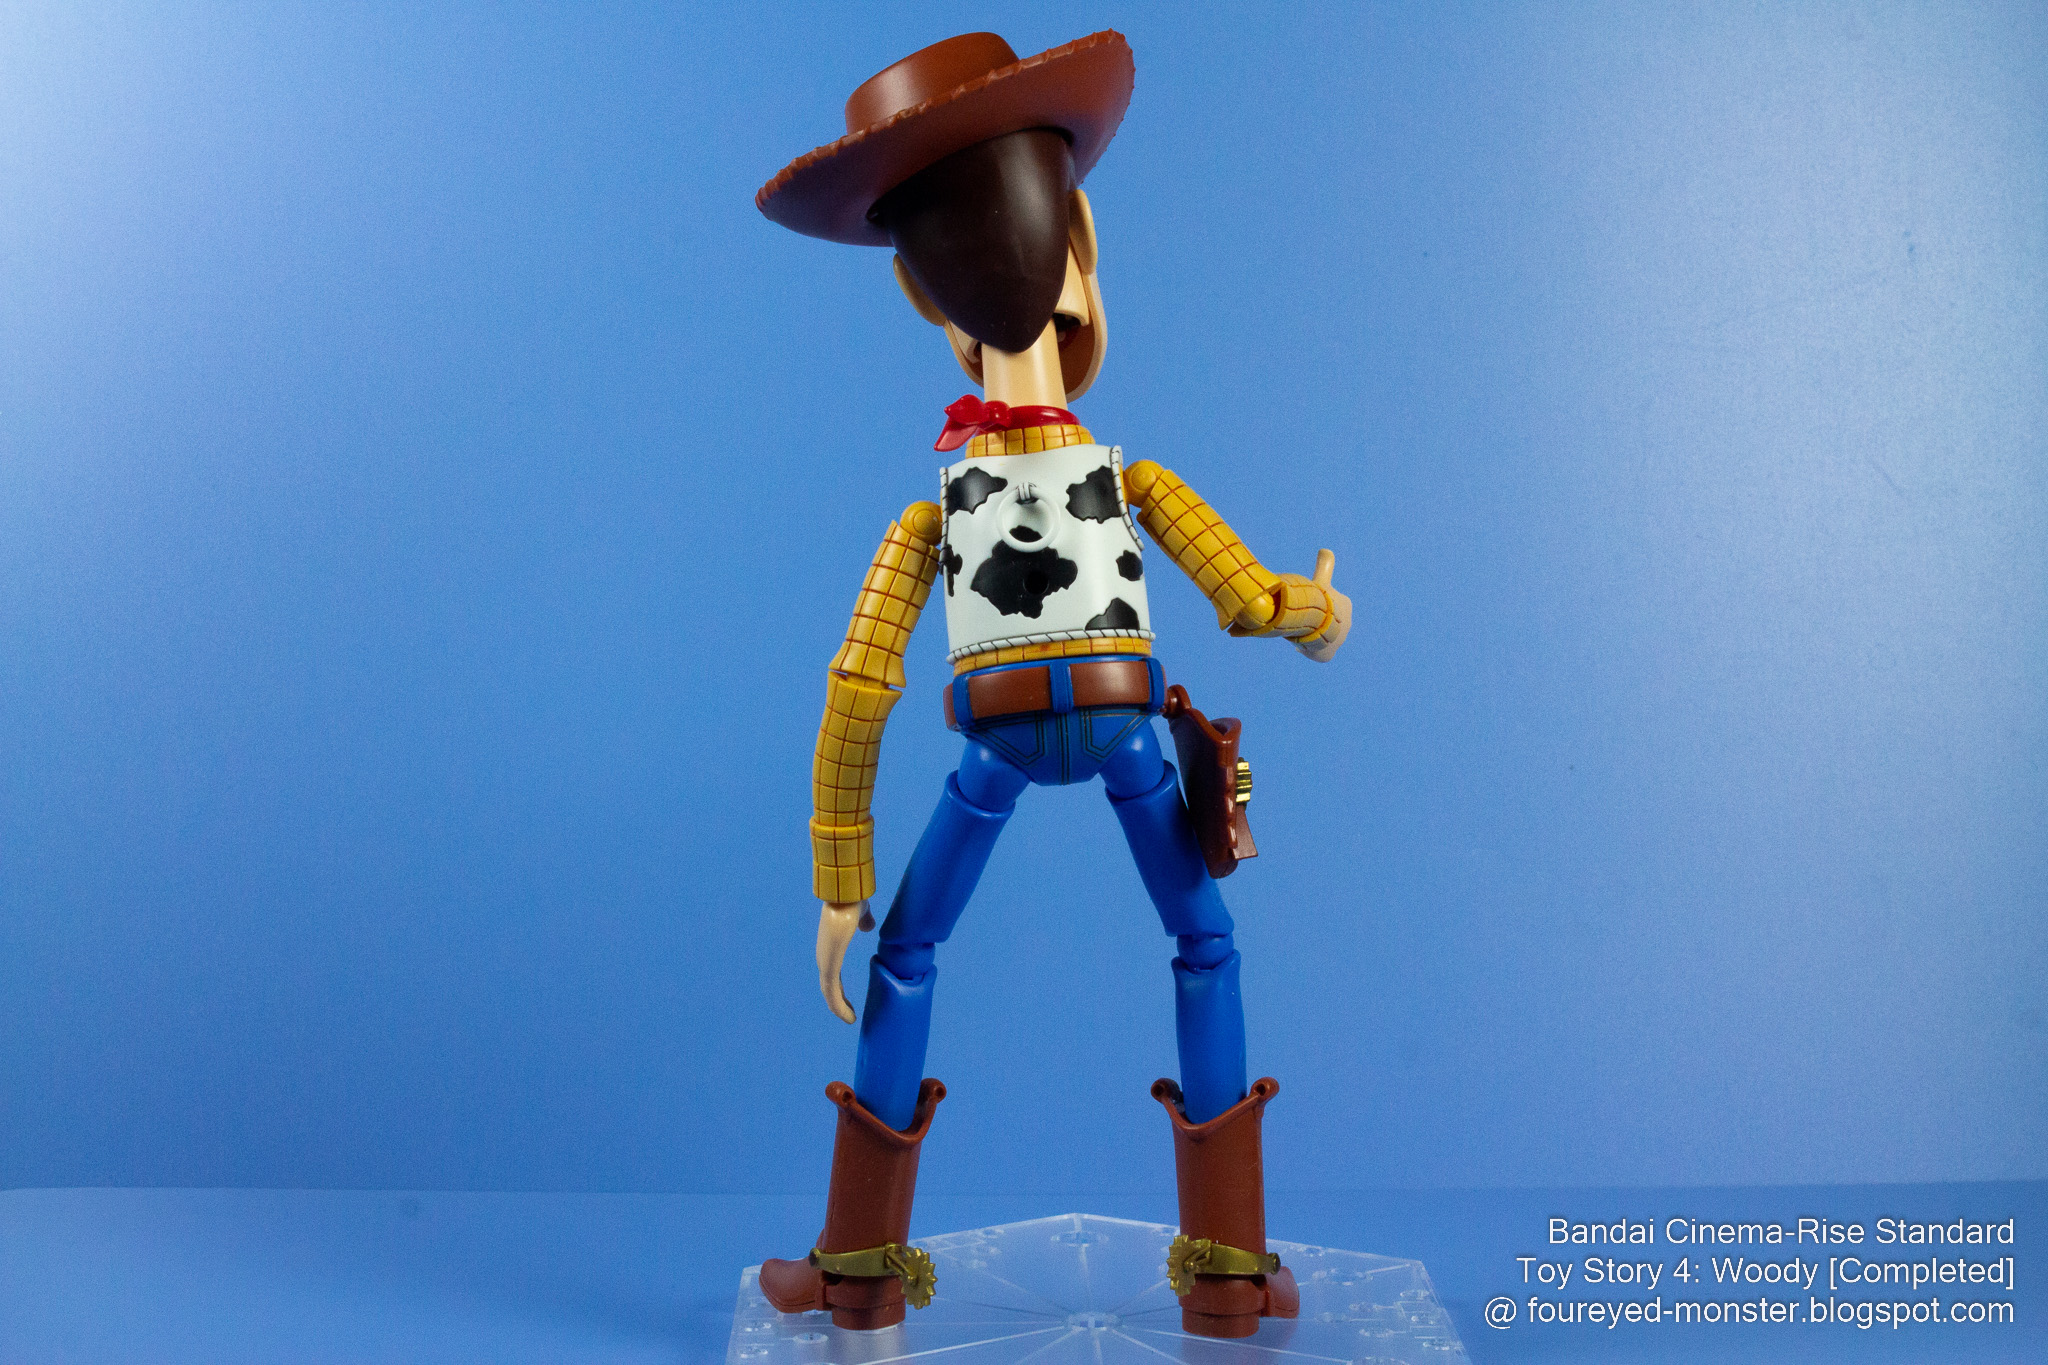 Bandai Hobby Cinema-Rise Standard Sheriff Woody Toy Story